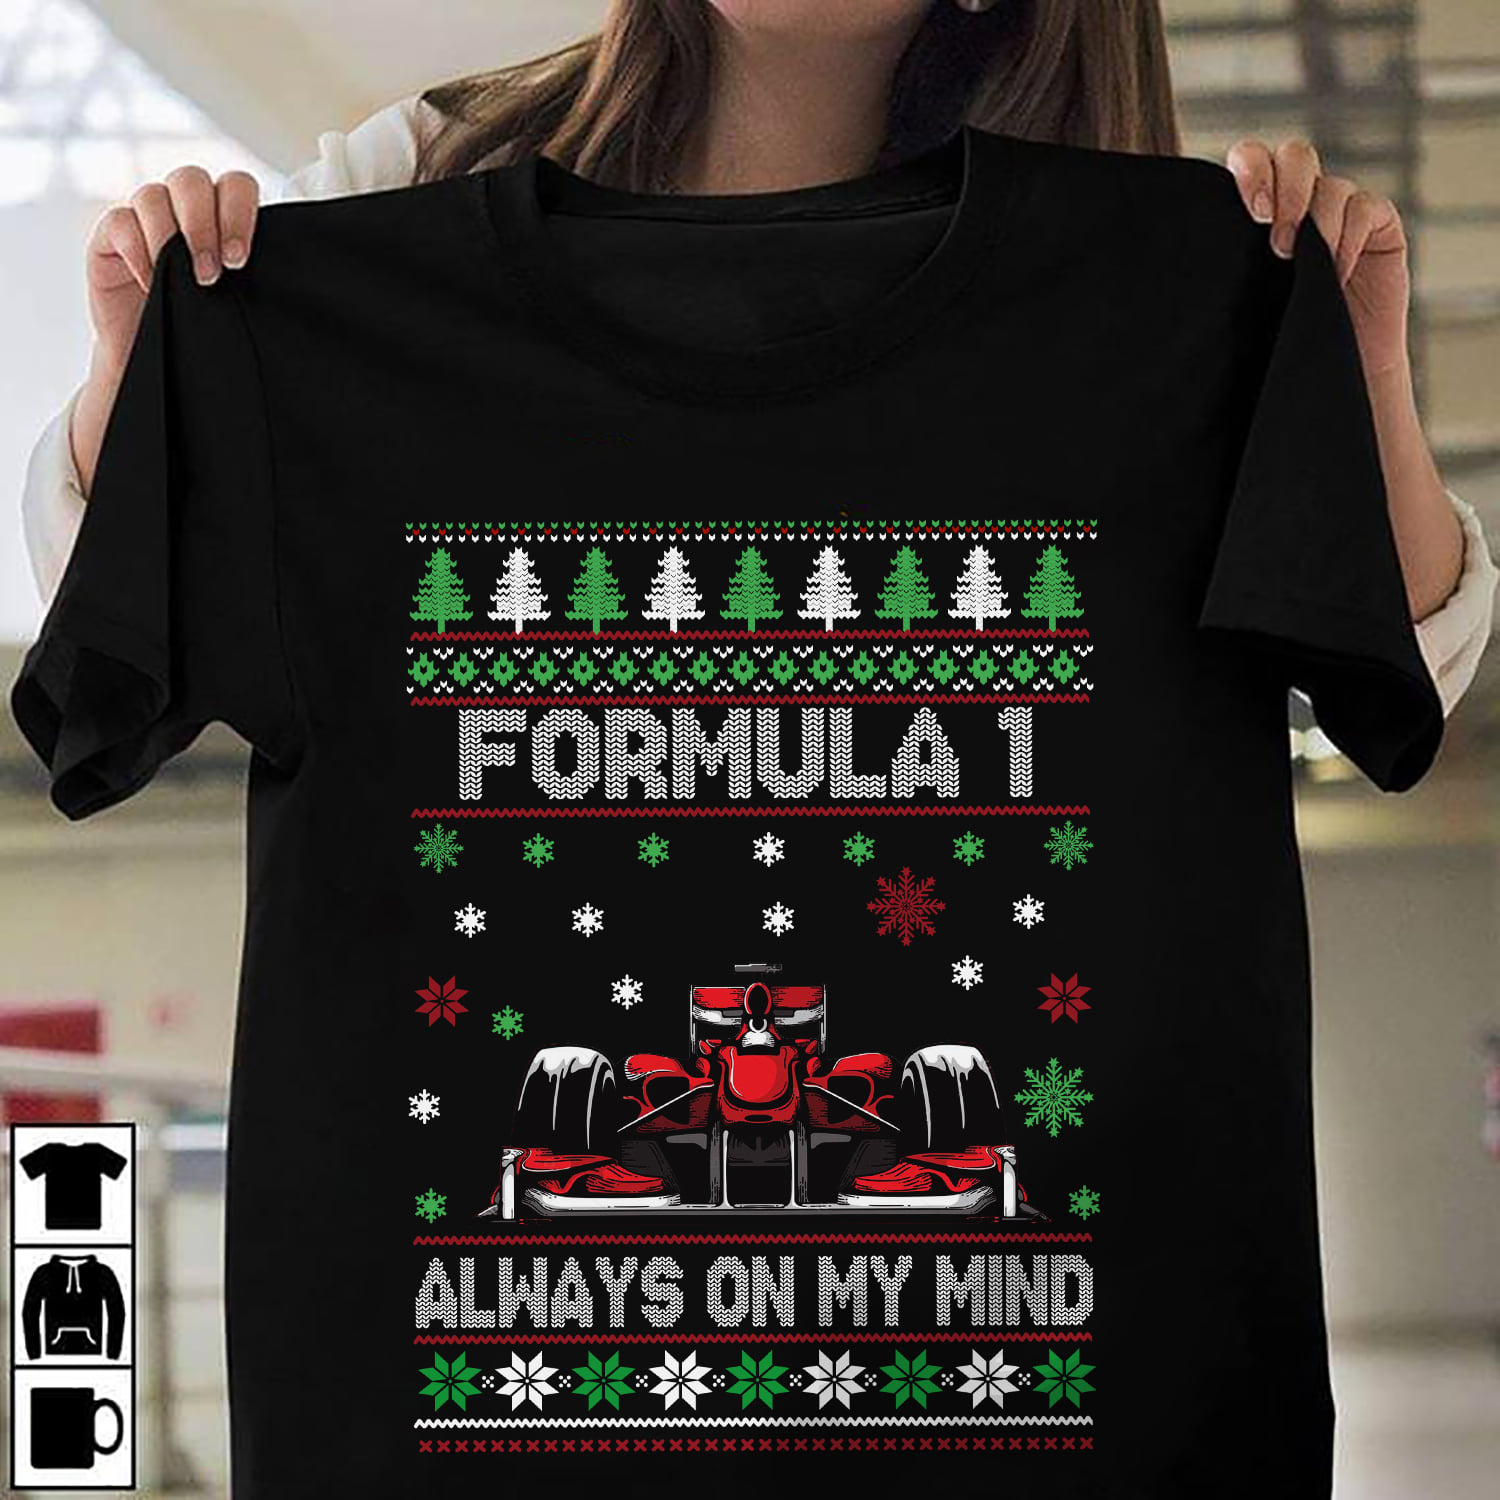 Formula 1 always on my mind - Formula one racer, Christmas and Formula racing